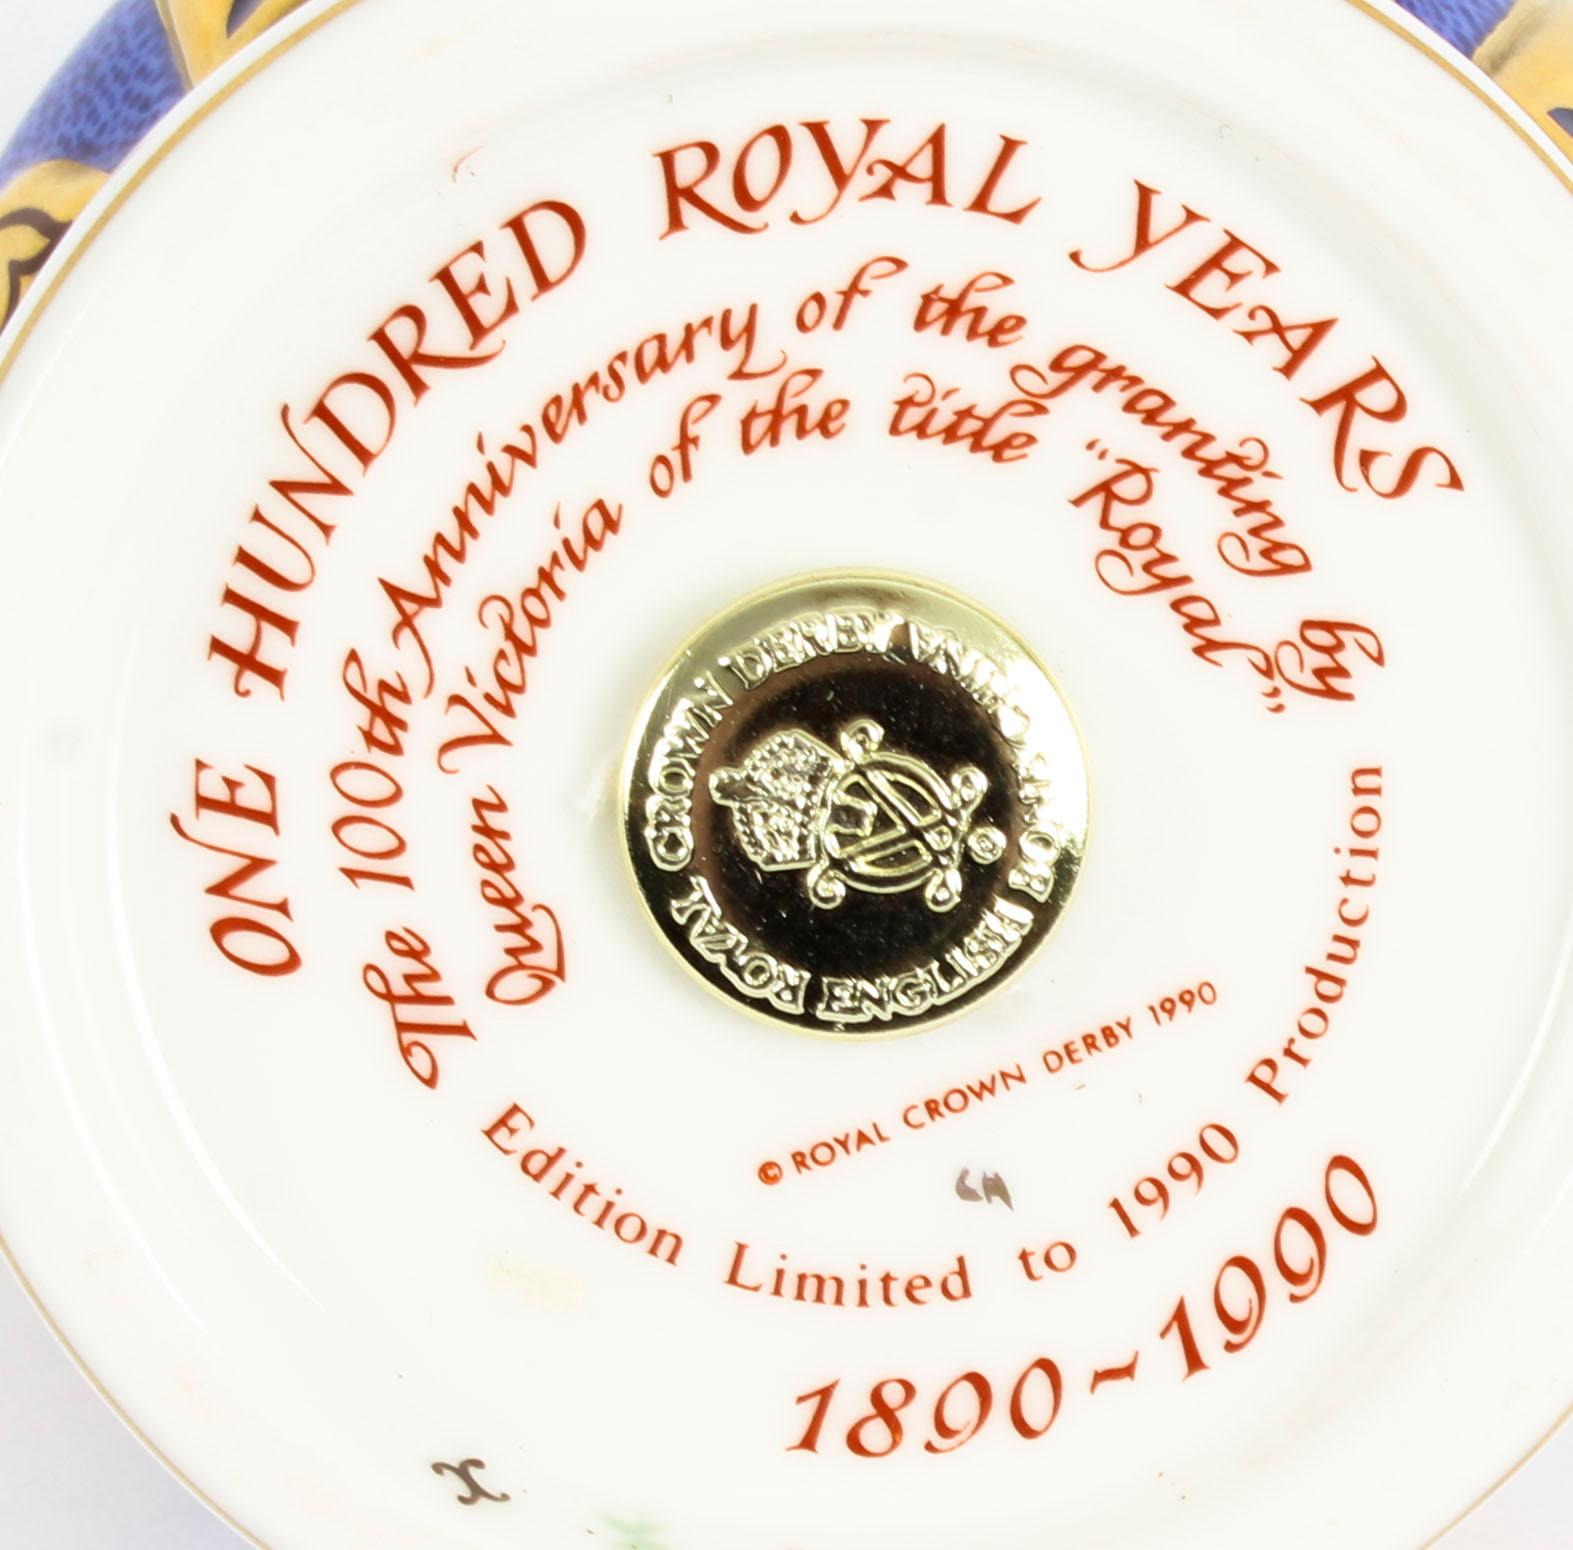 Vintage Cased Royal Crown Derby Commemorative Crown Paperweight, 1990 5